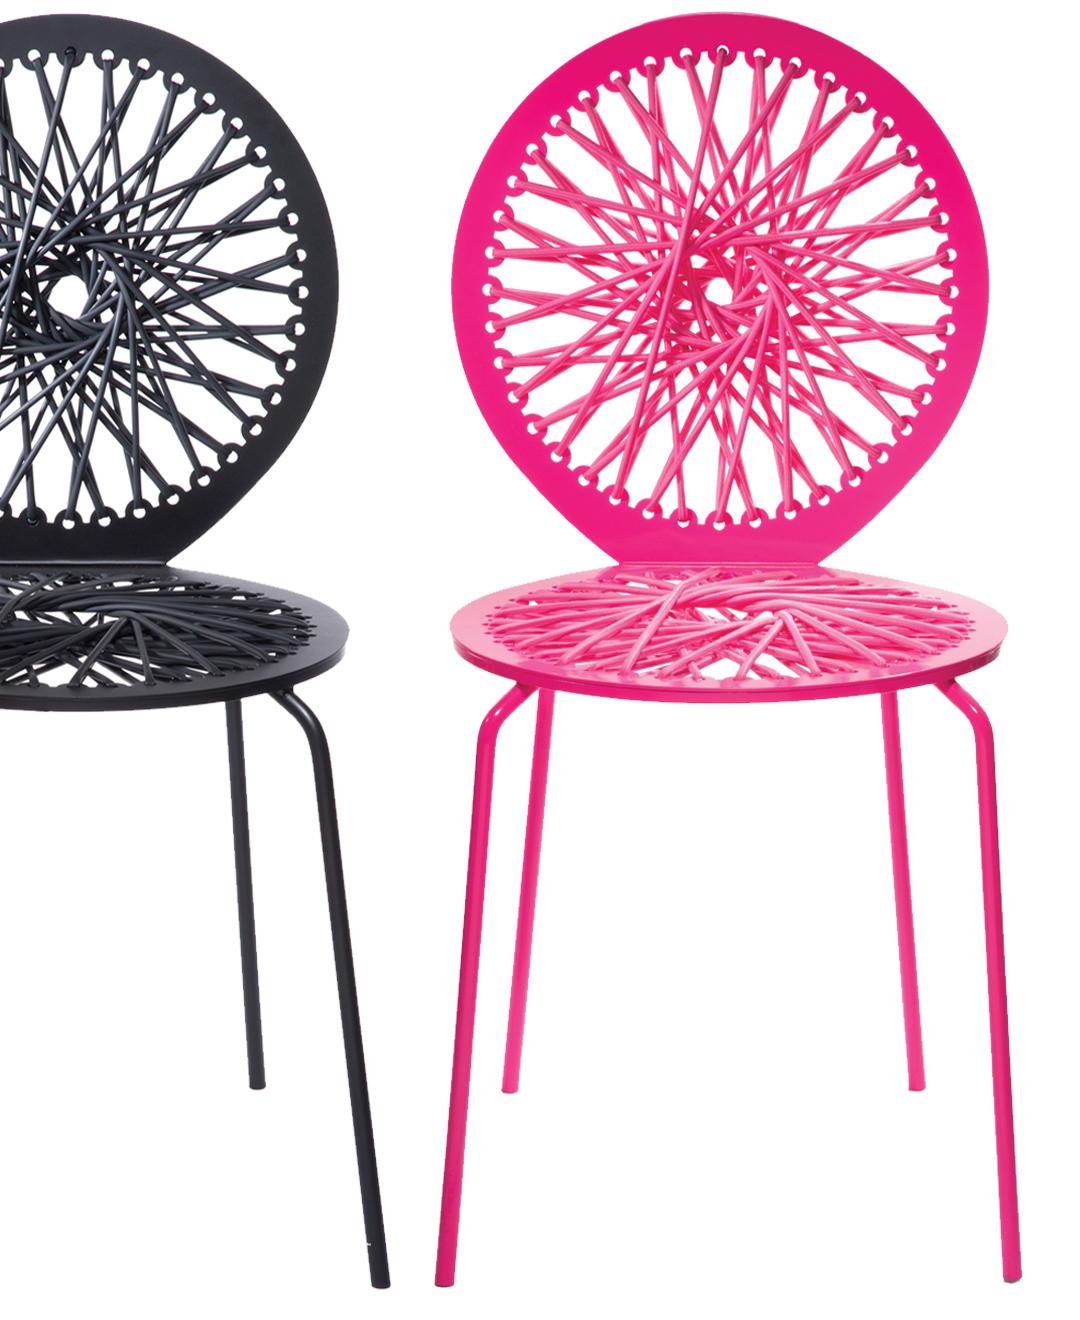 pink stool